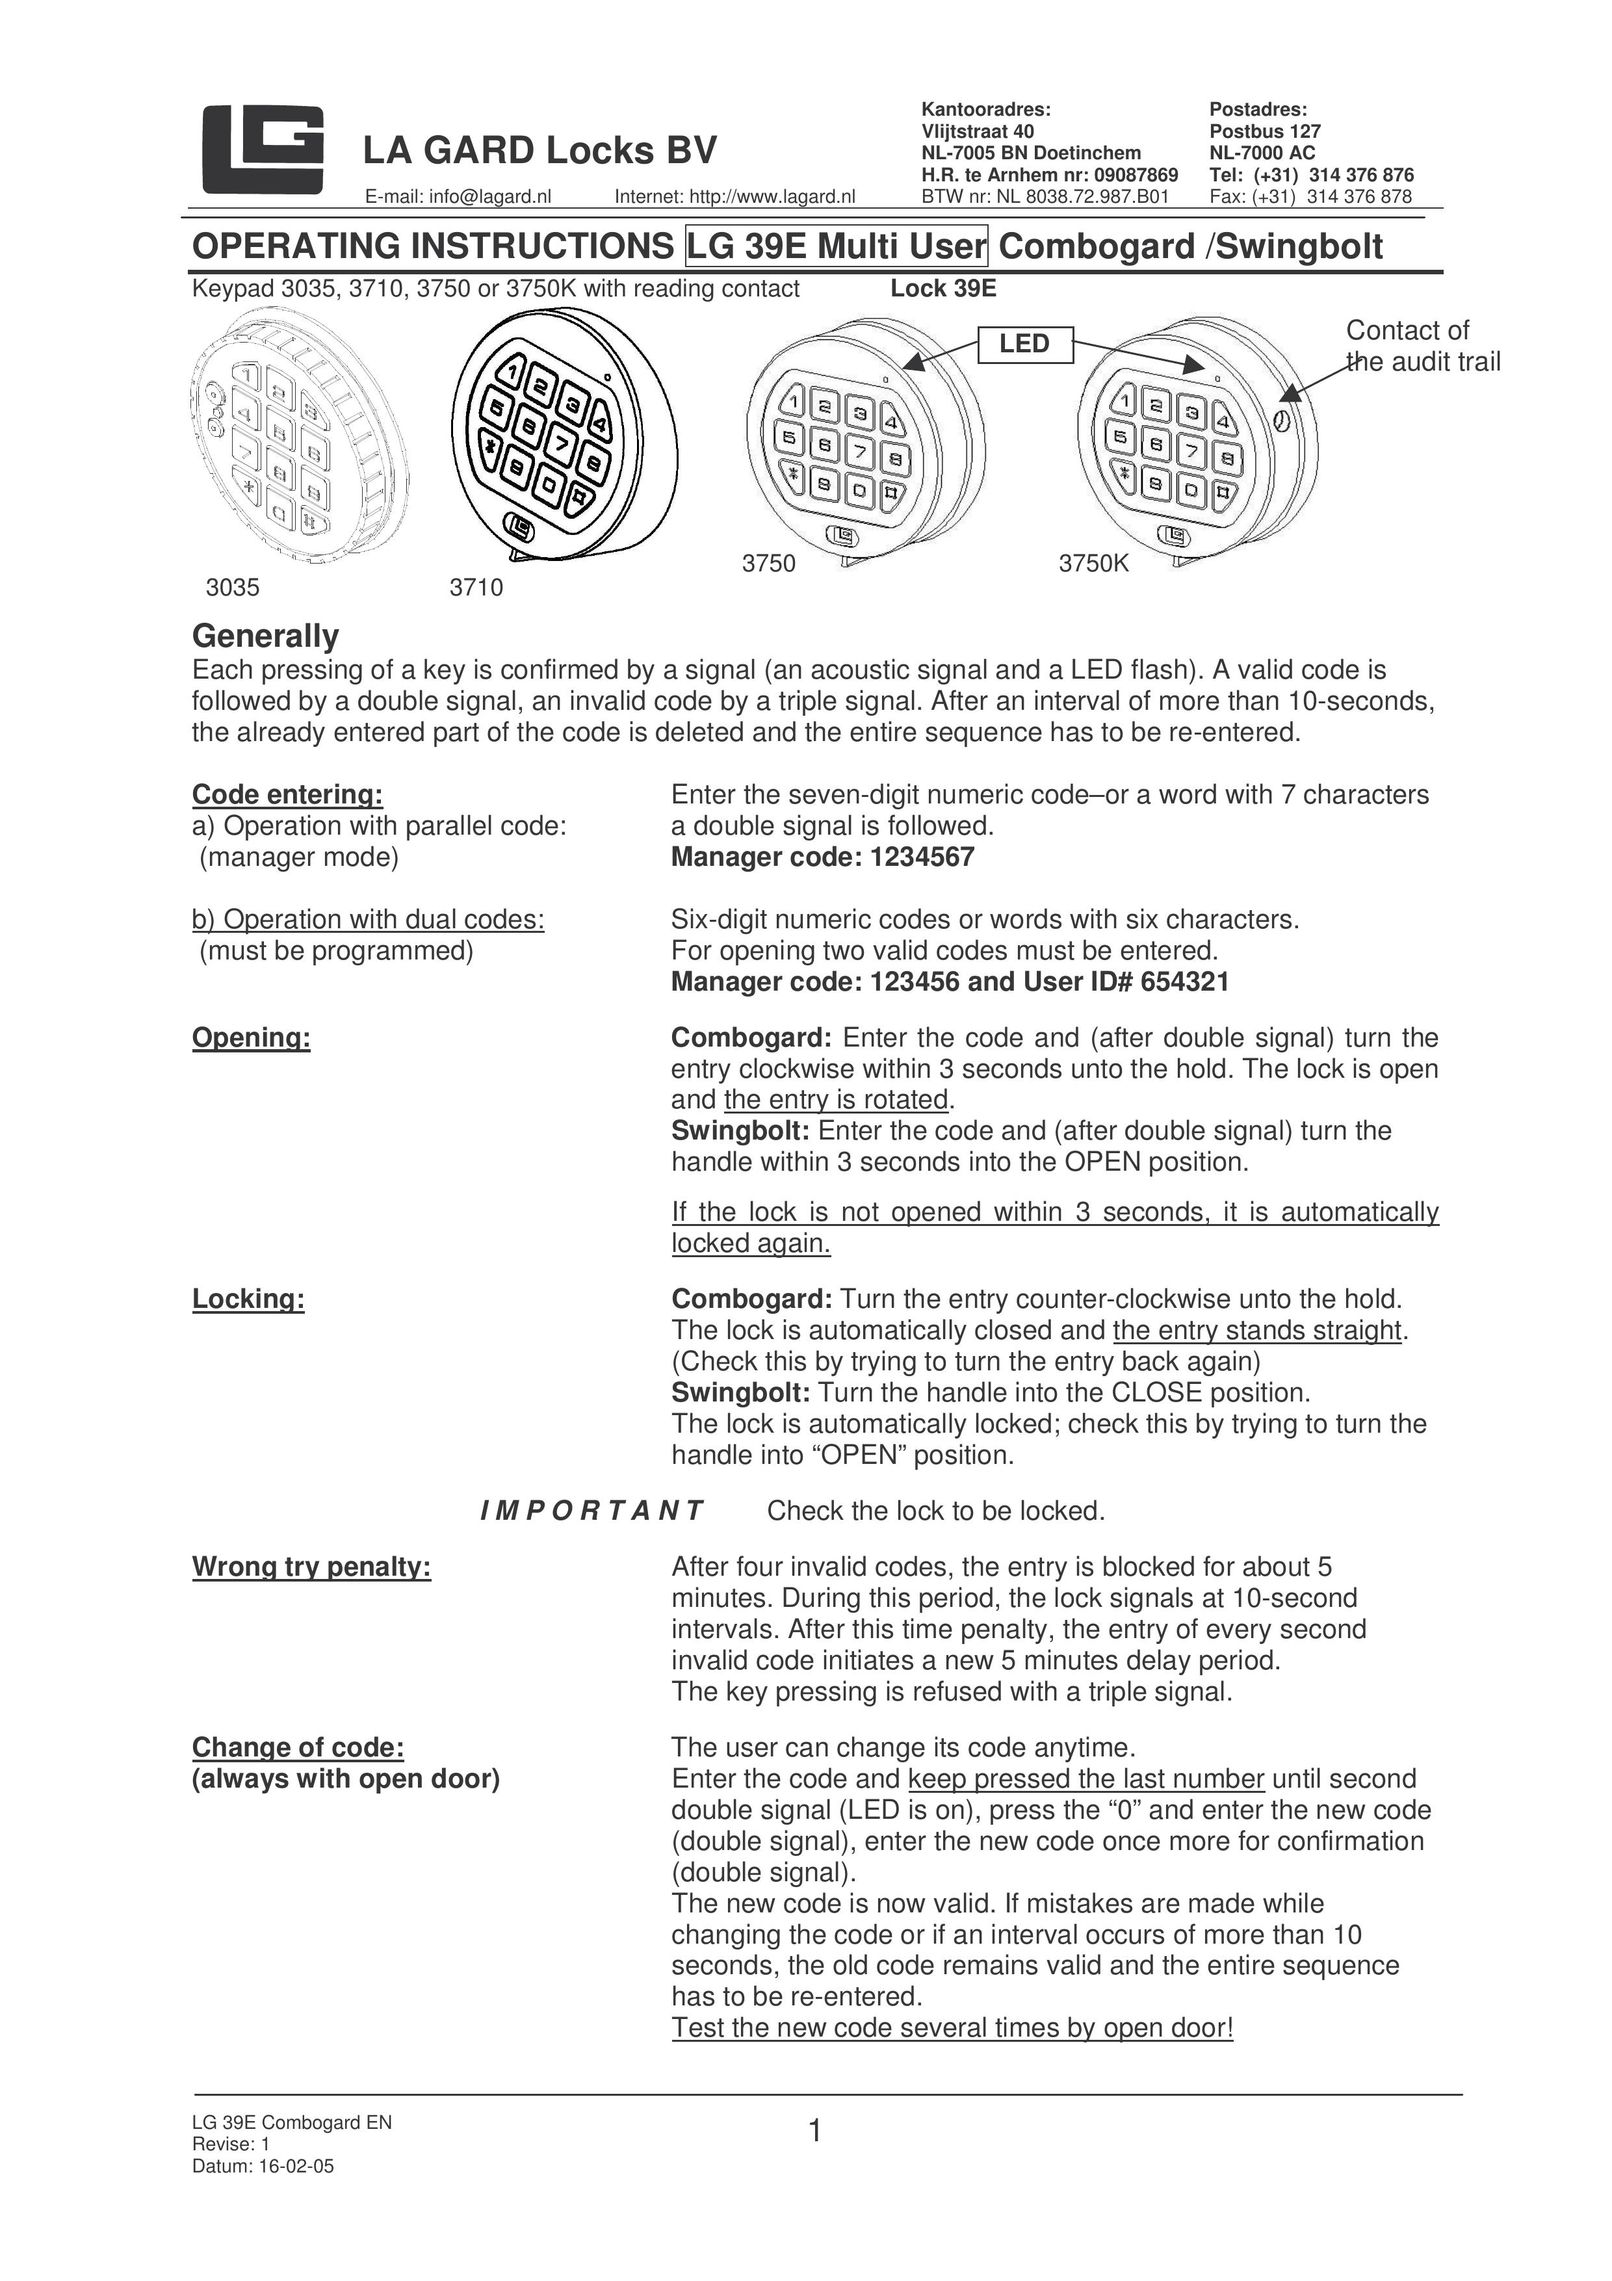 LG Electronics NL-7005 BN Door User Manual